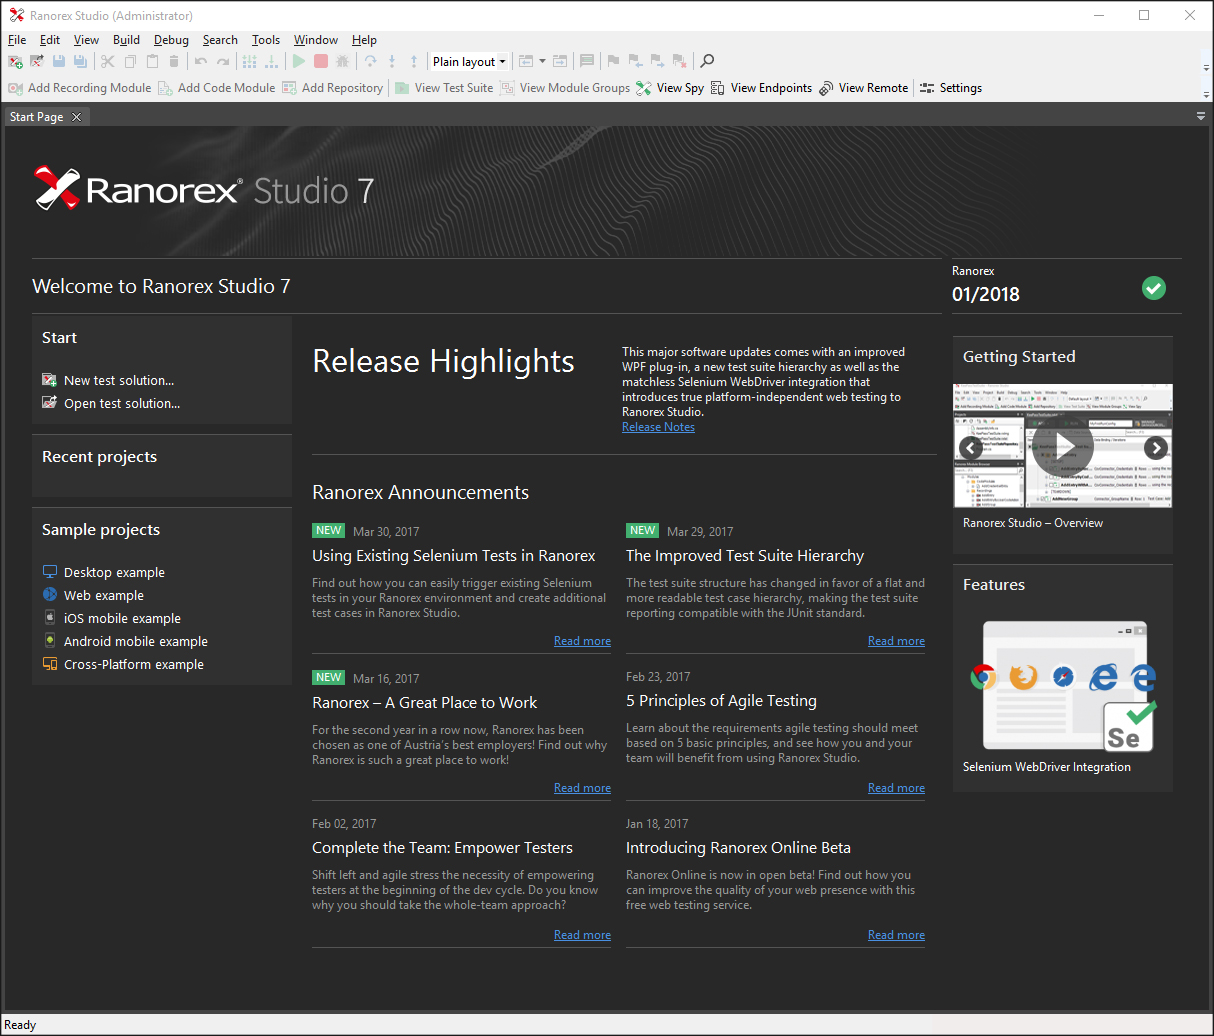 Ranorex Studio start page